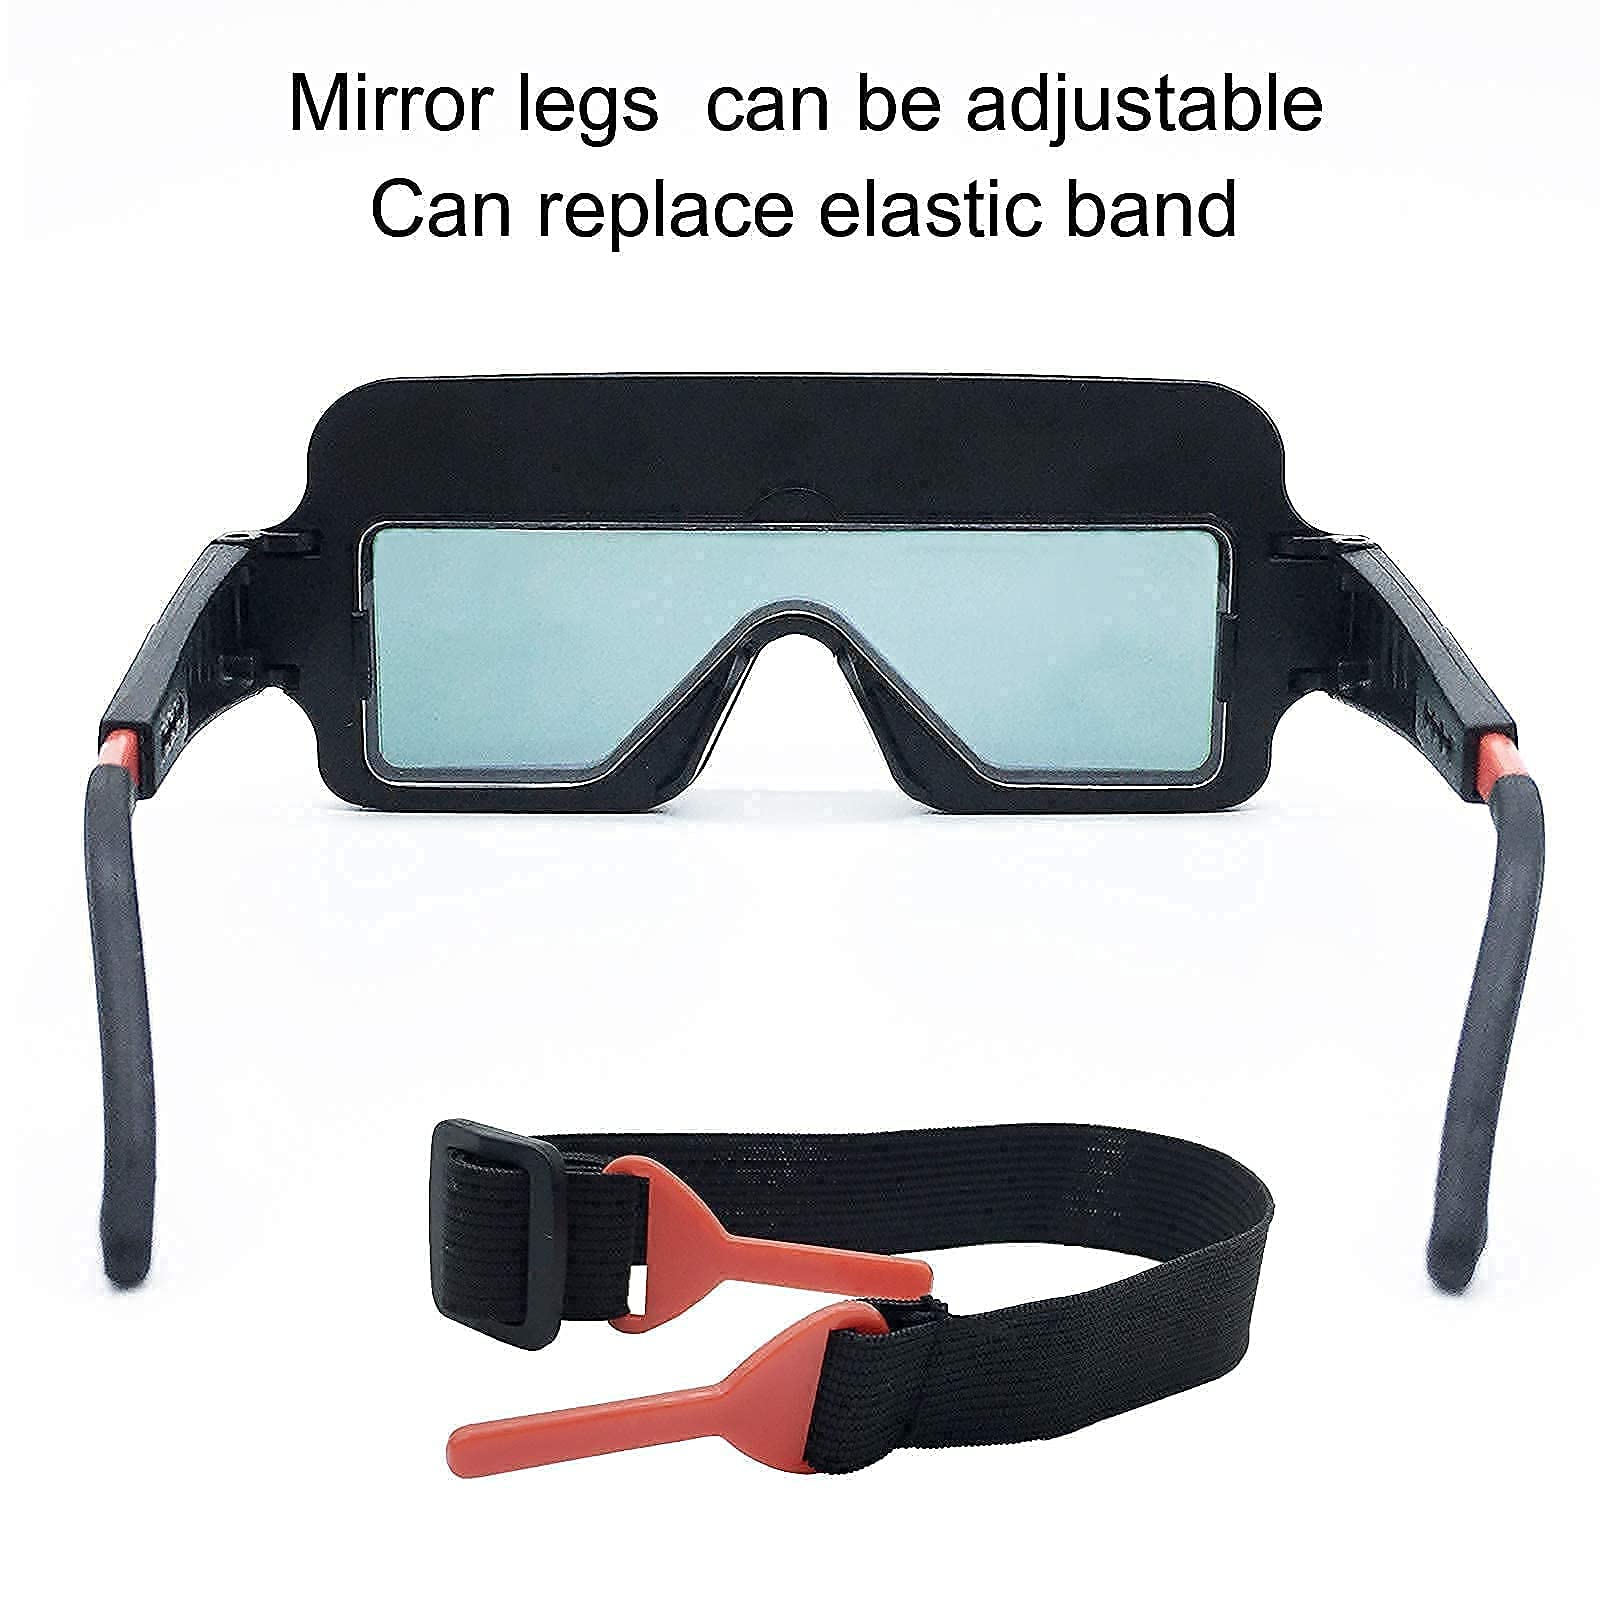 Welding Goggles Auto Darkening,Solar Auto Darkening Welding Glasses Over Glasses Mask Helmet, Welder Safety Eye Protection PC Glasses